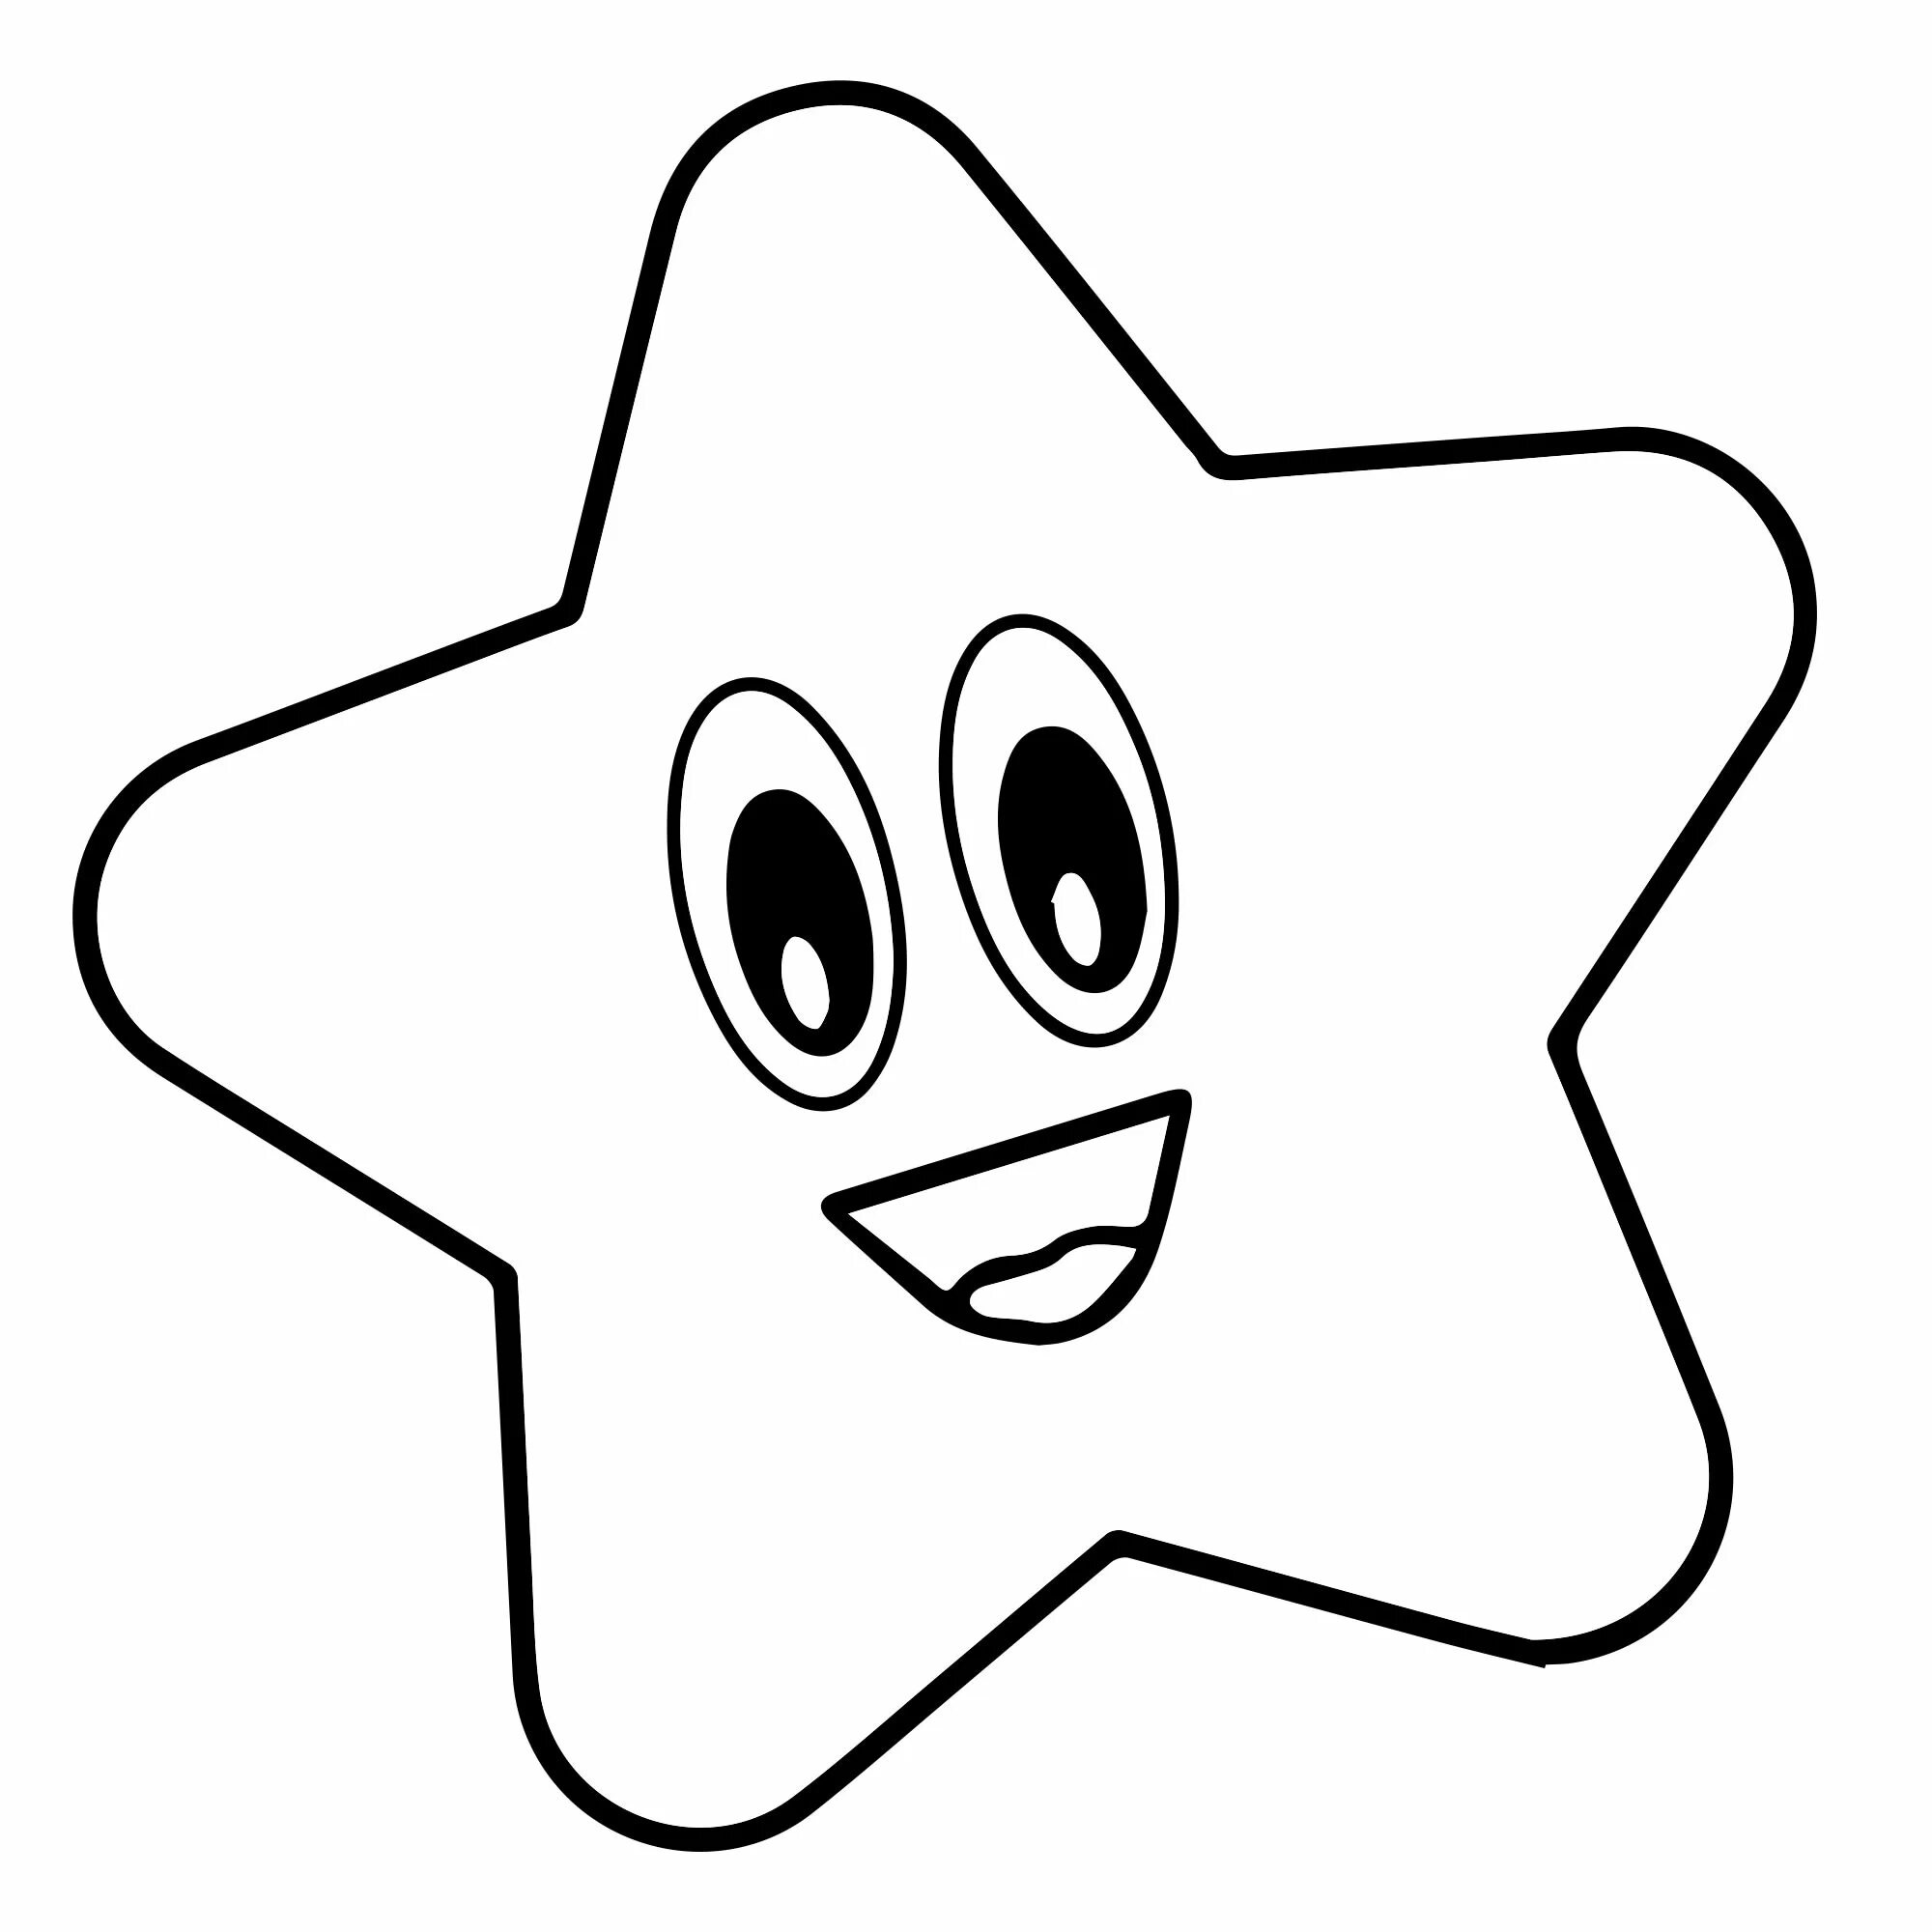 Star for kids #4